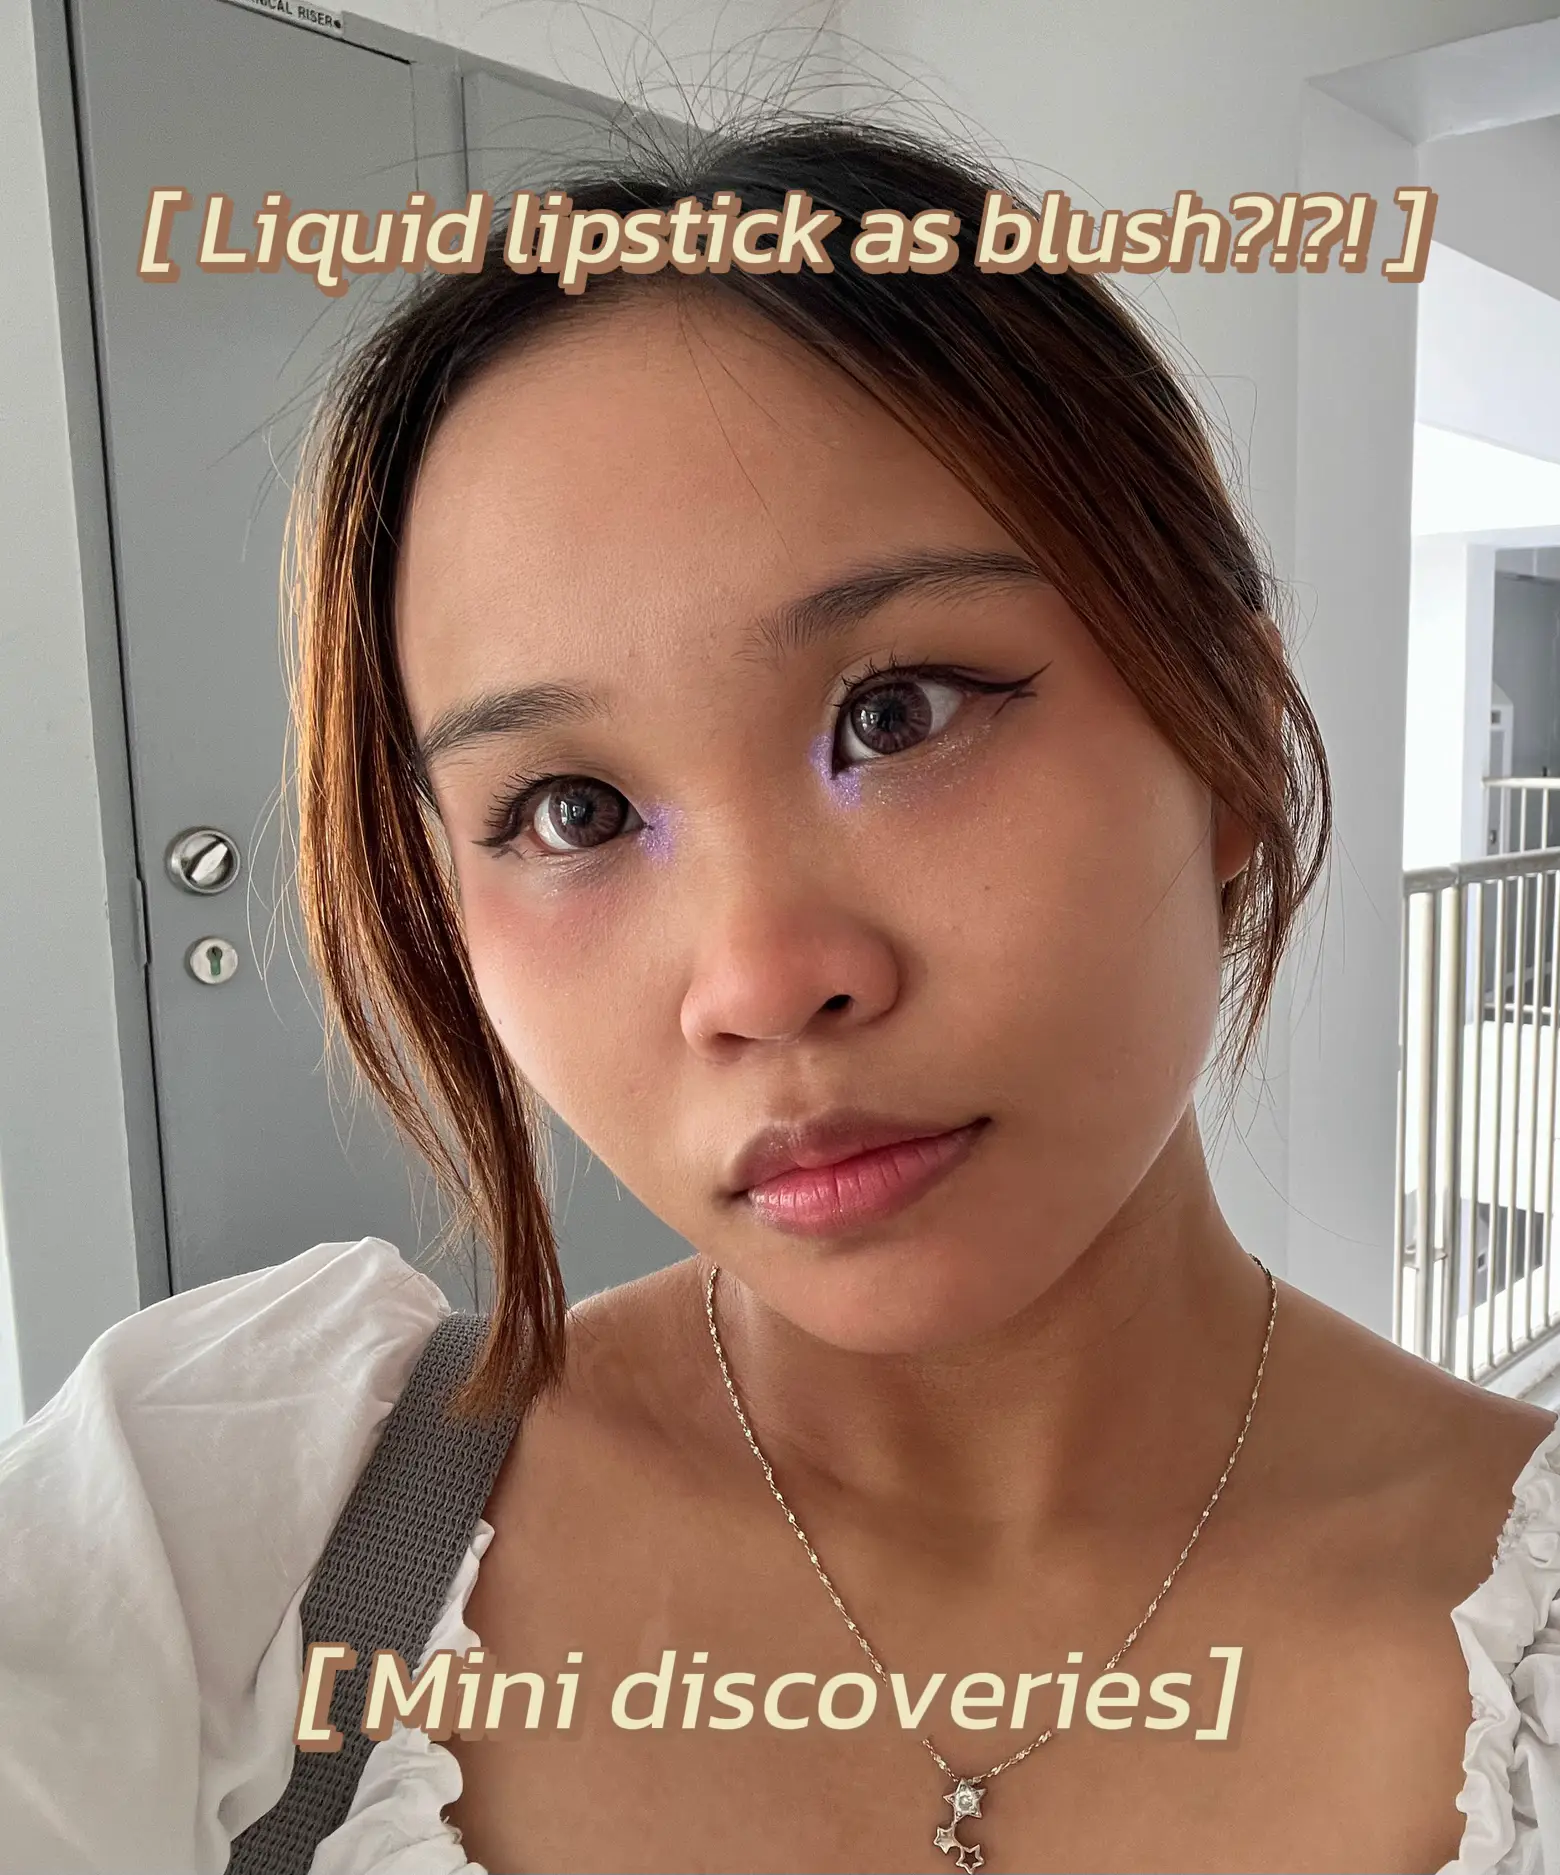 Meet espressoh's Caffeinated Lipsticks, Blushes